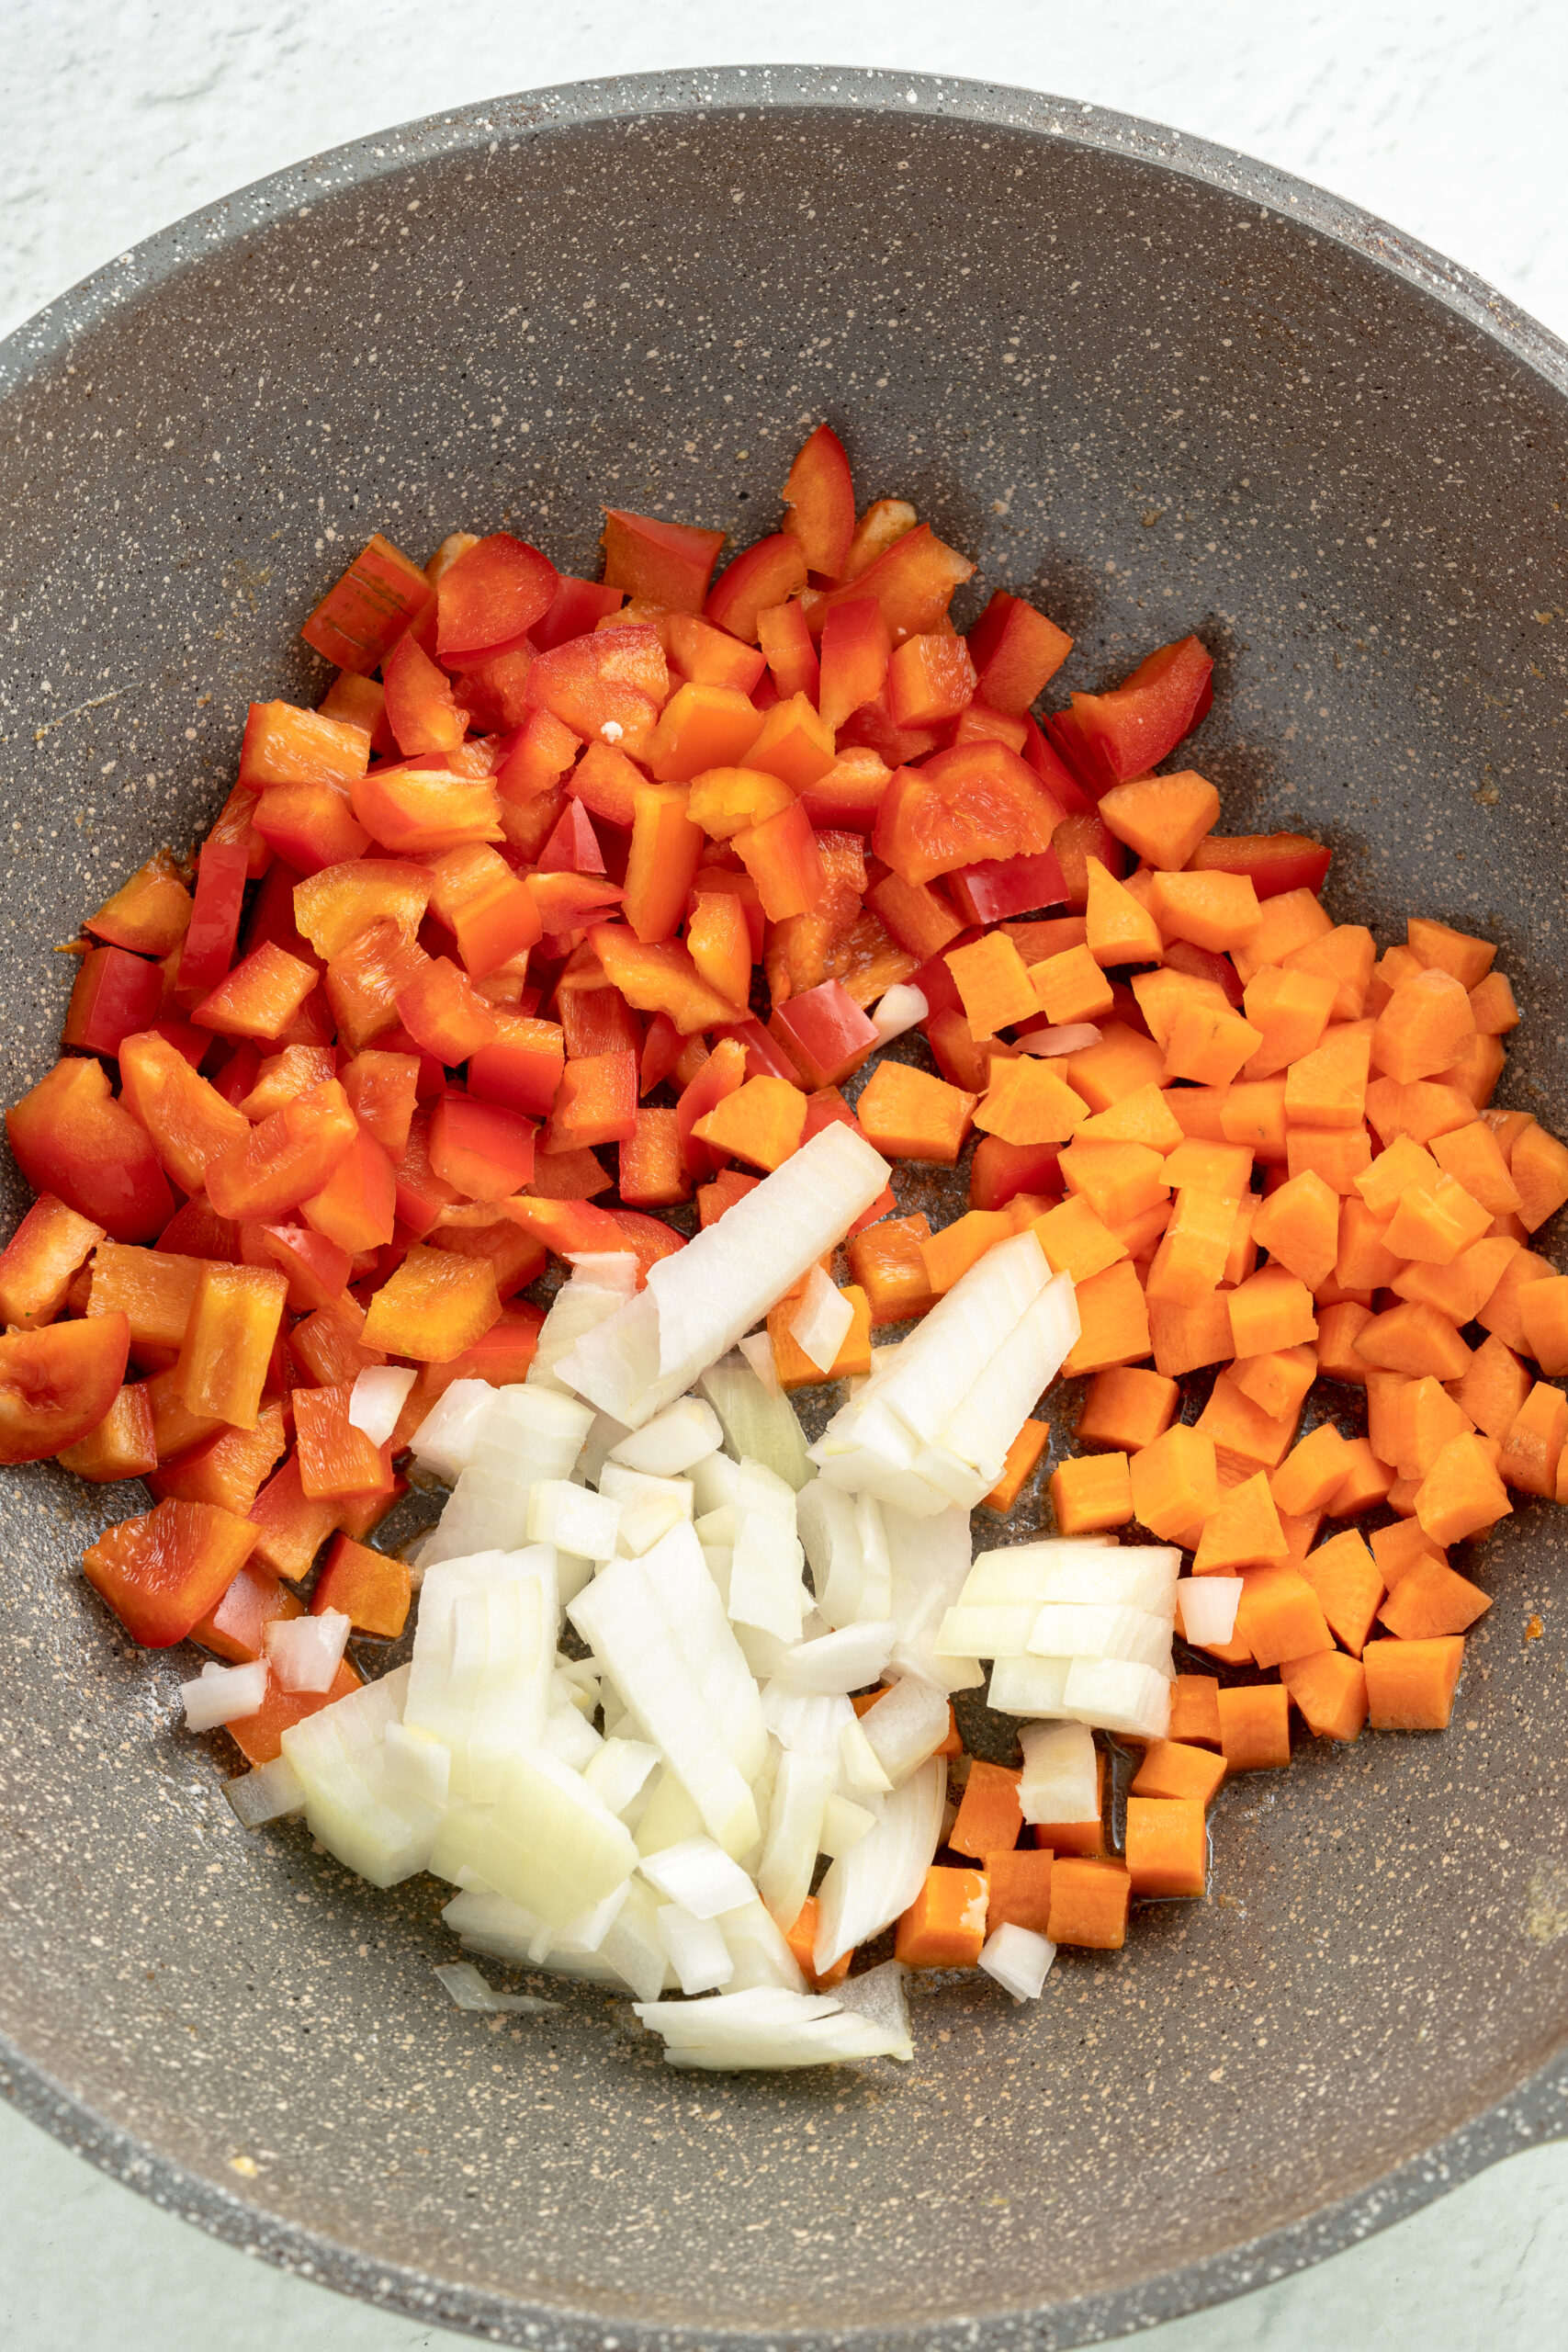 Diced vegetables in bowl.